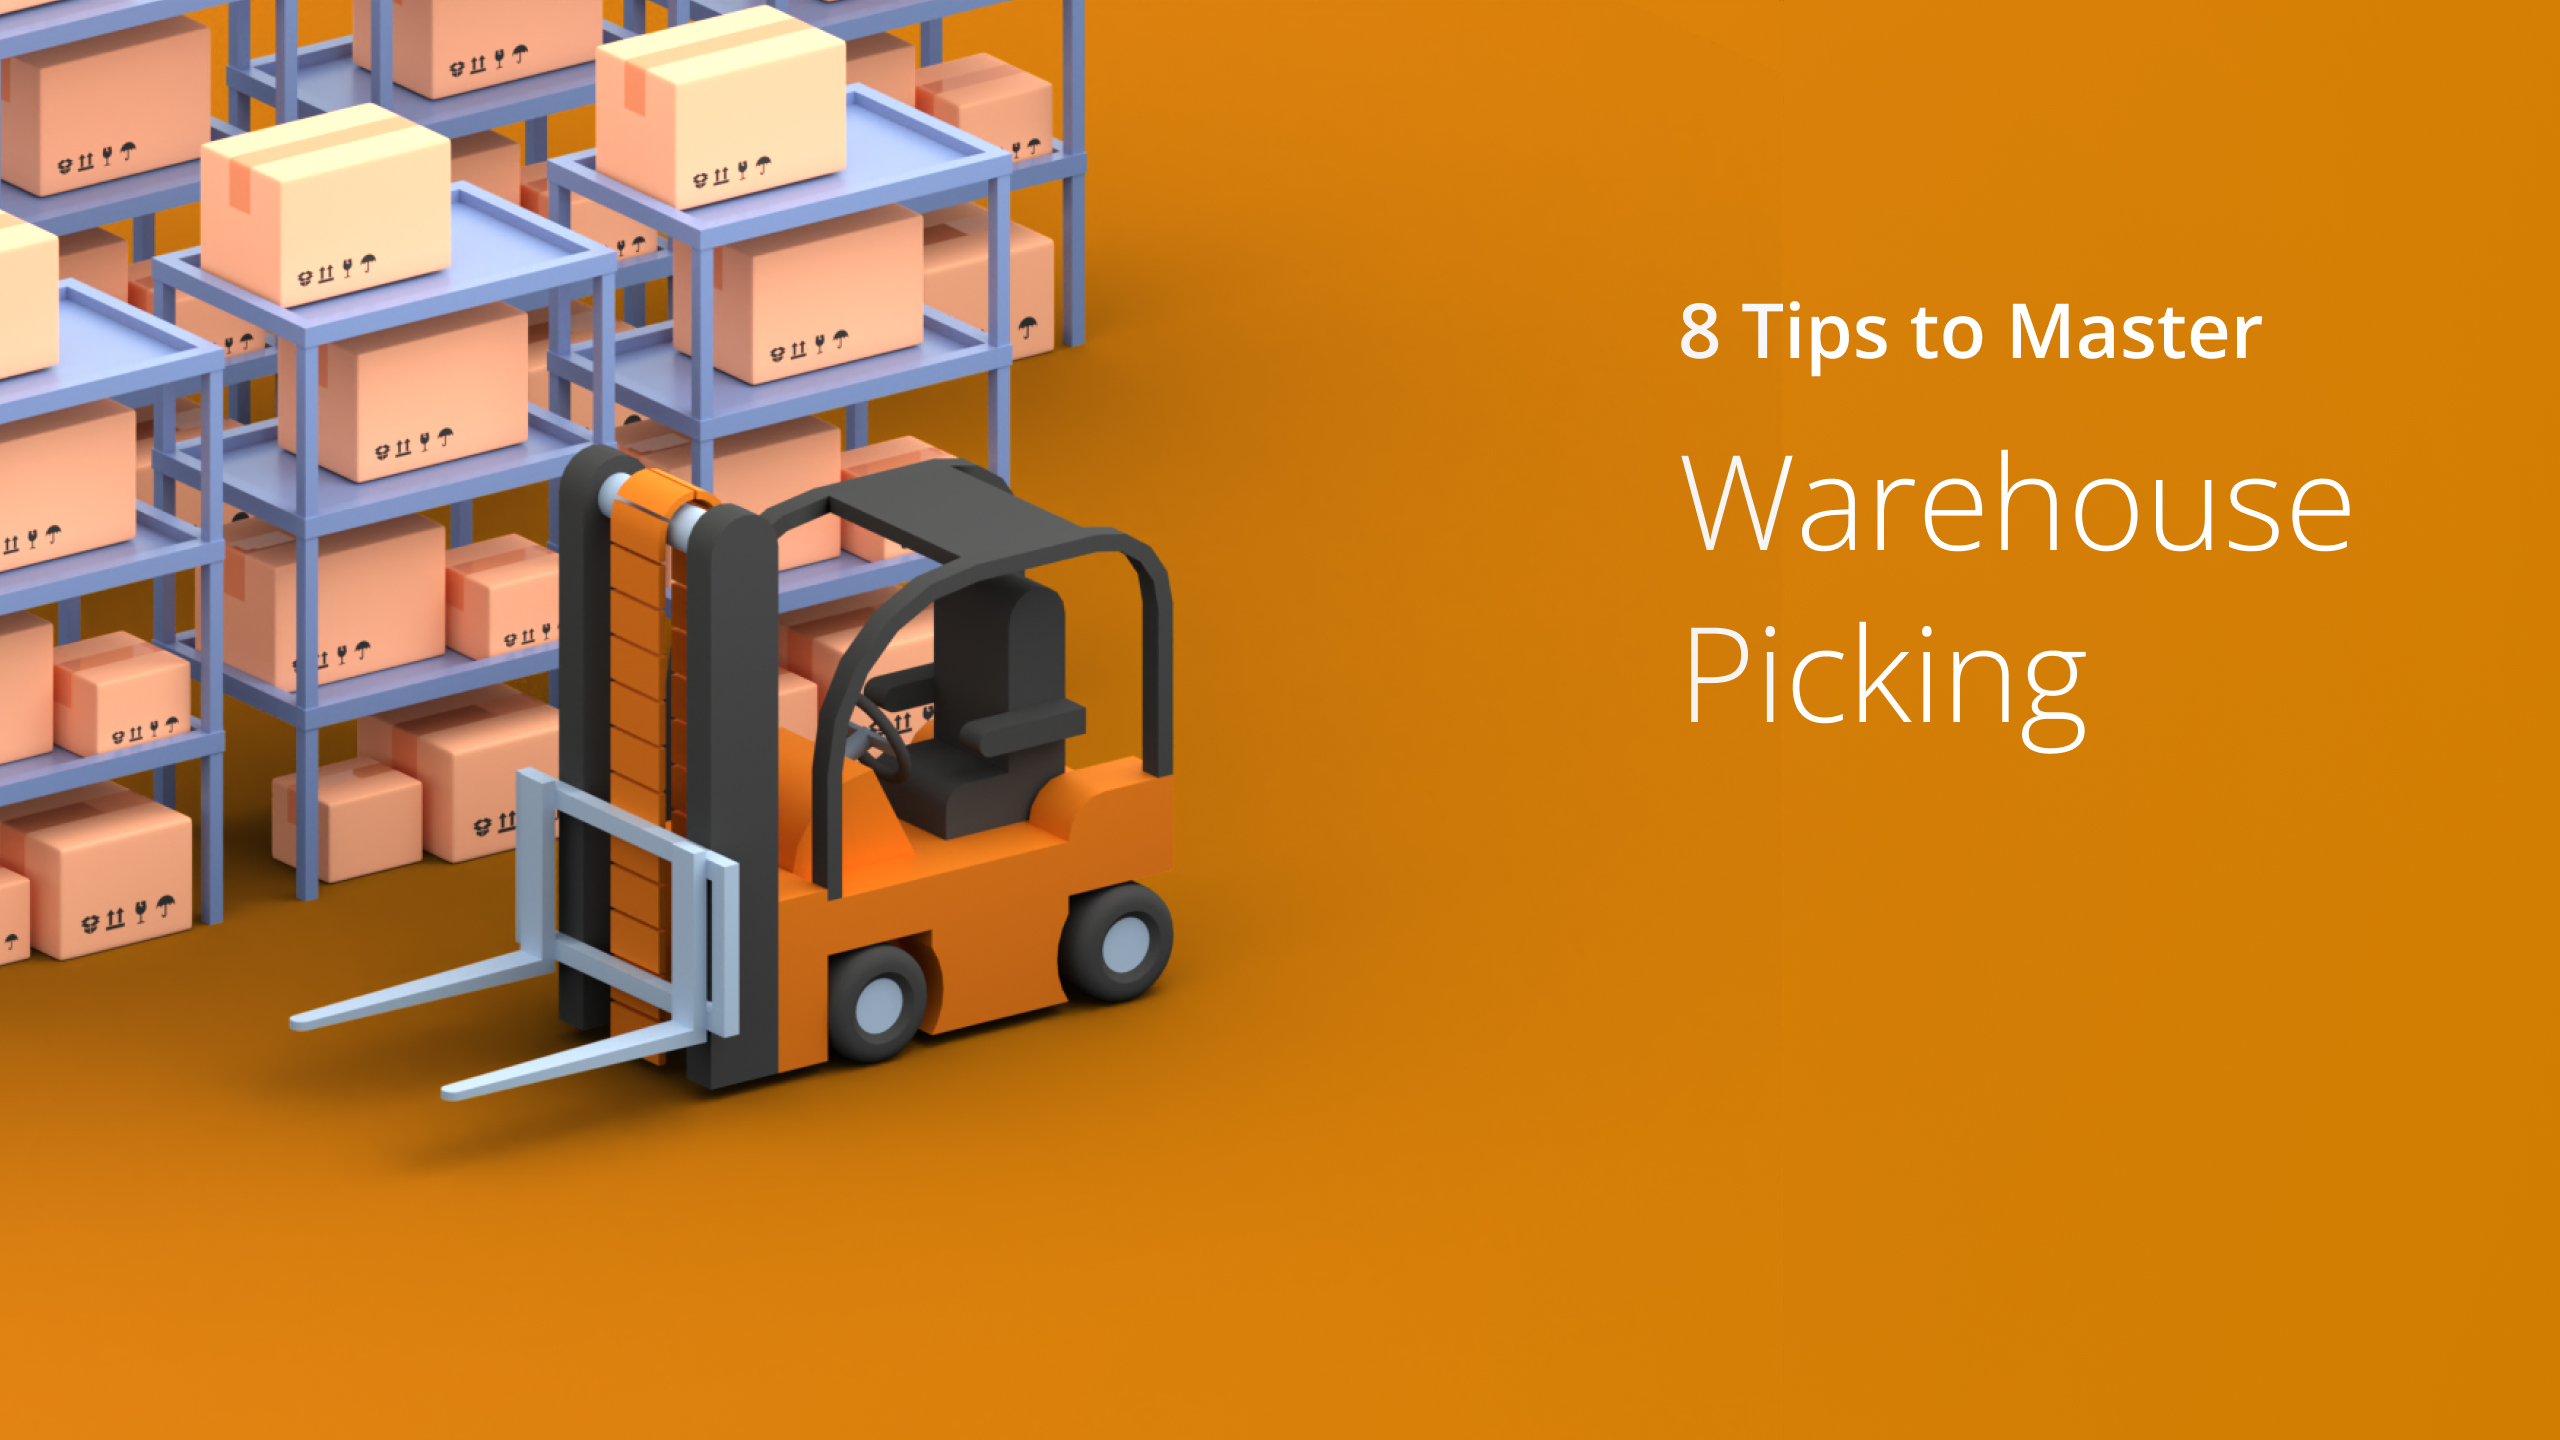 Custom Image - 8 Tips to Master Warehouse Picking